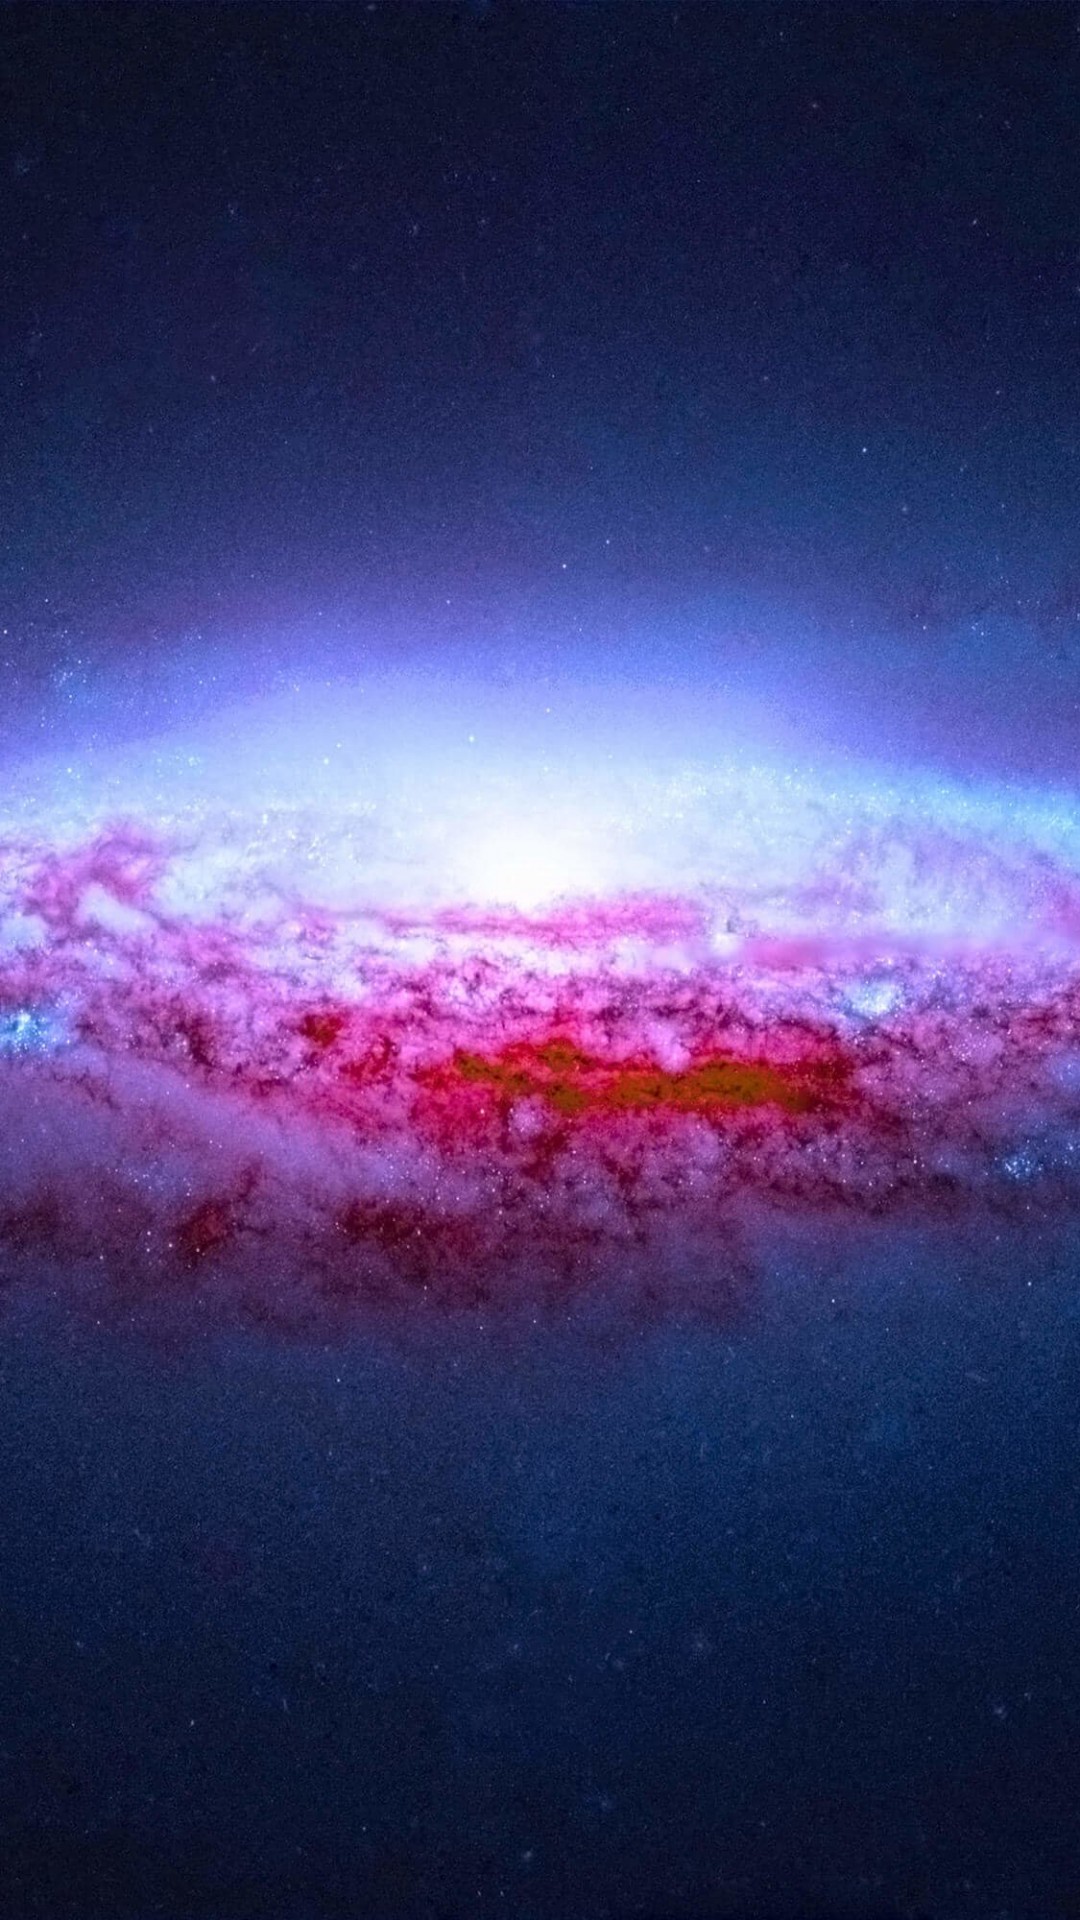 NGC 2683 Spiral Galaxy Wallpaper for LG G2